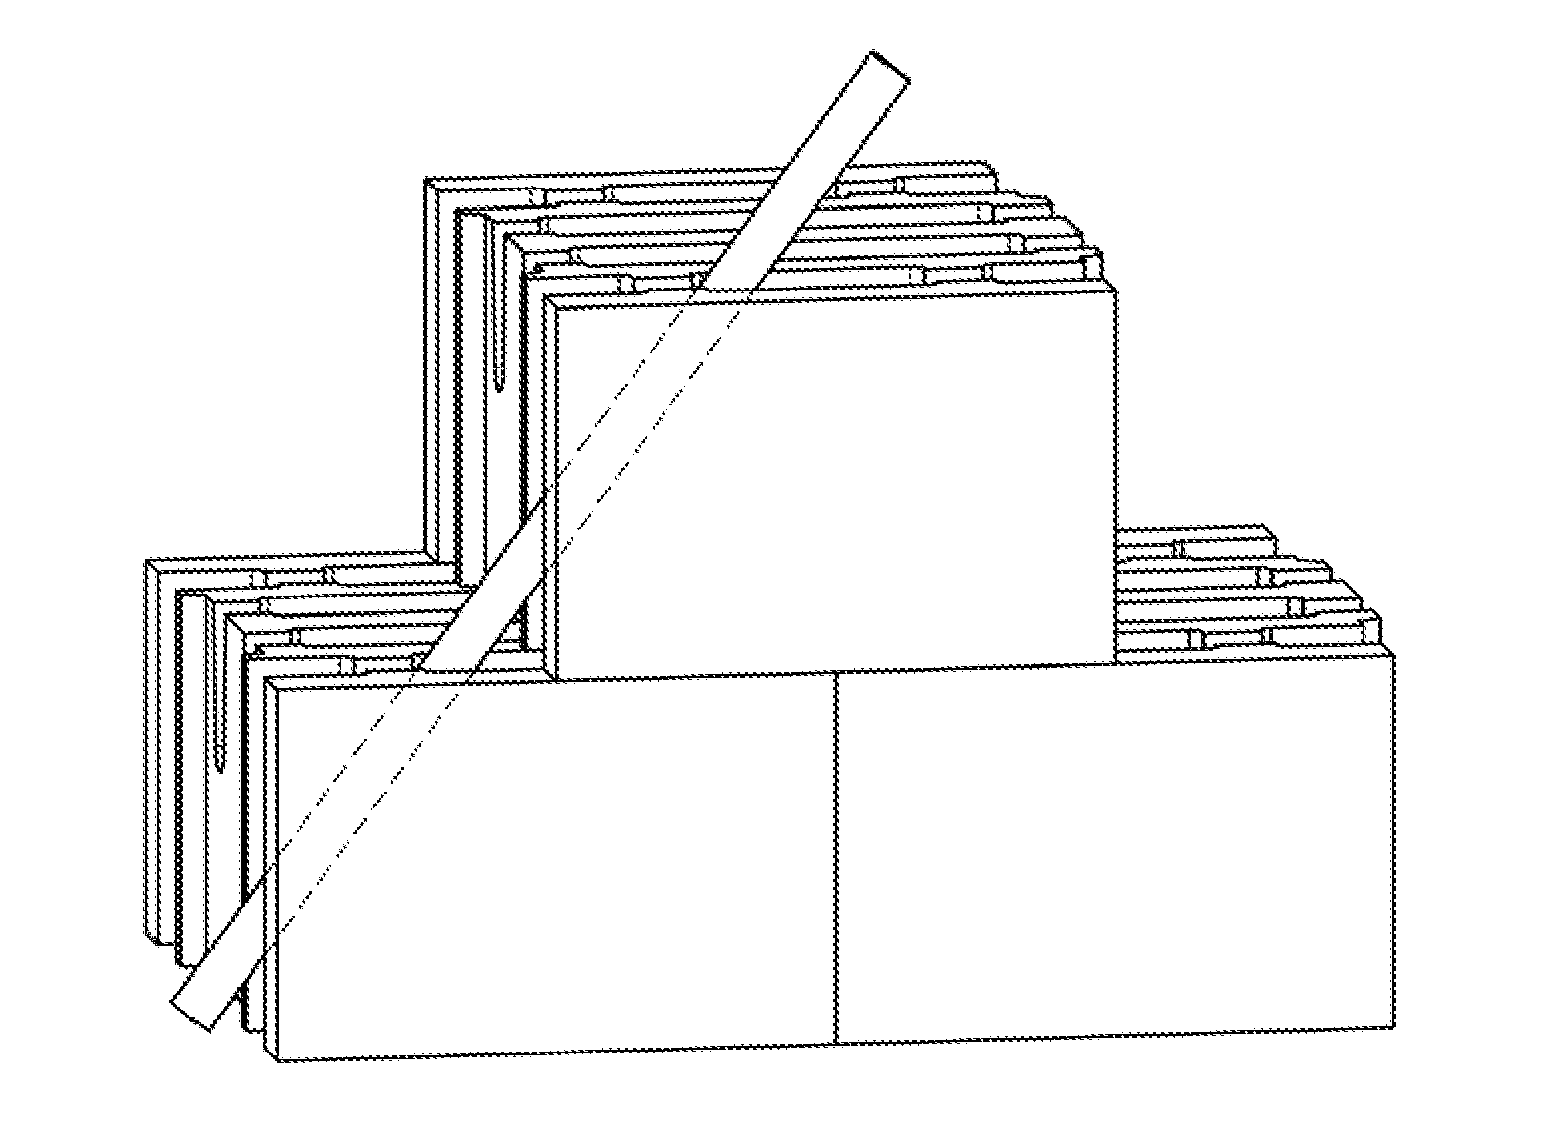 Masonry block system